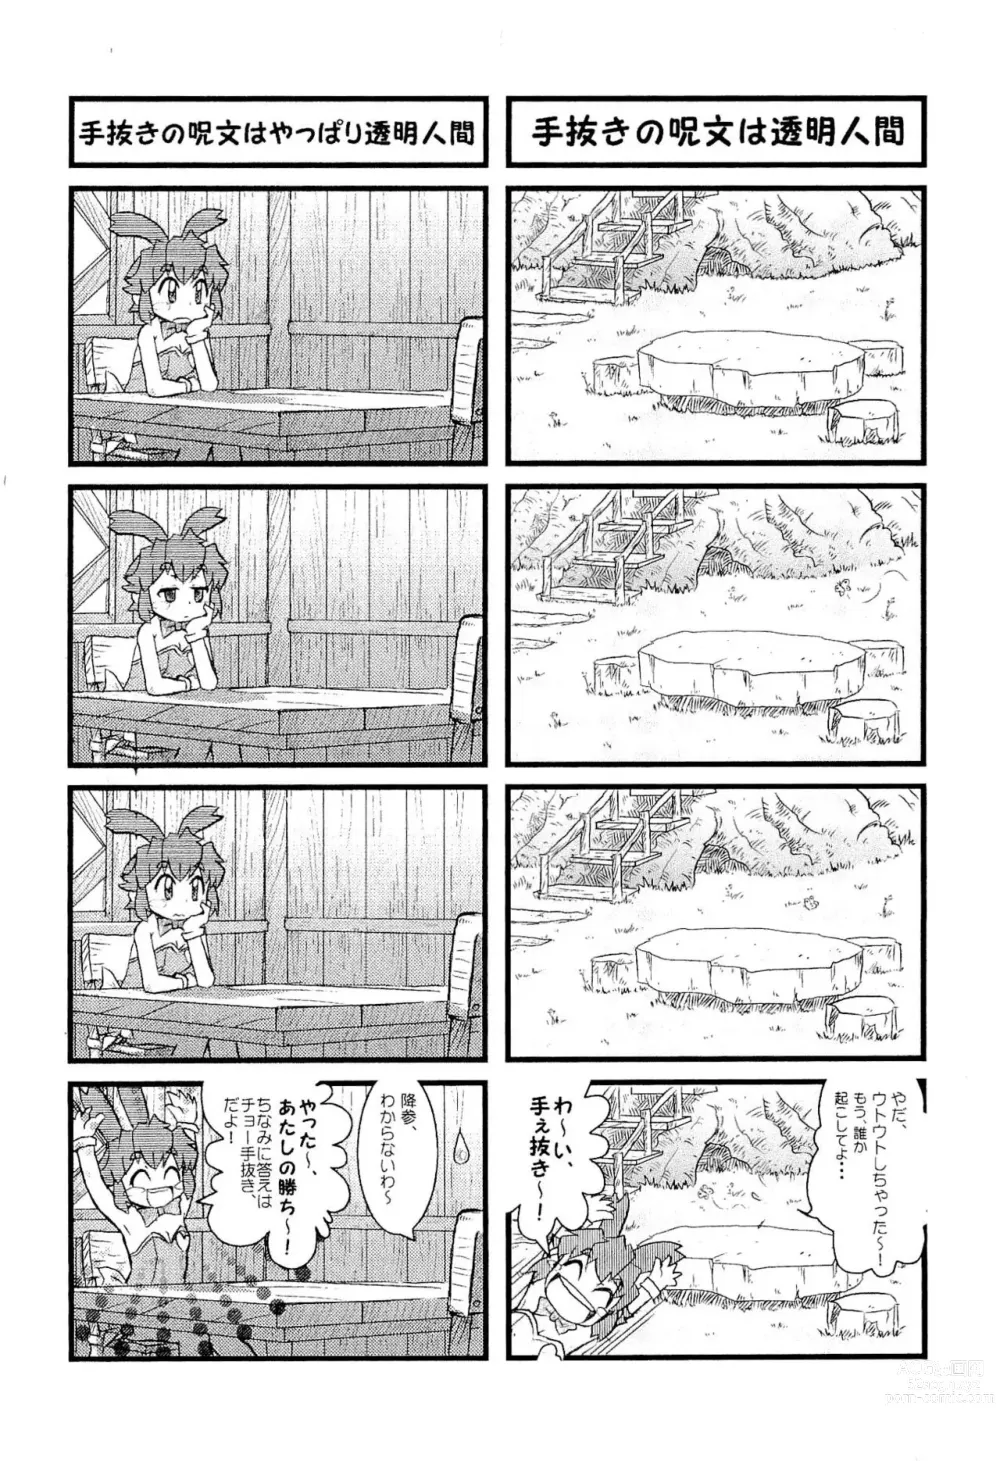 Page 10 of doujinshi Poka Poka